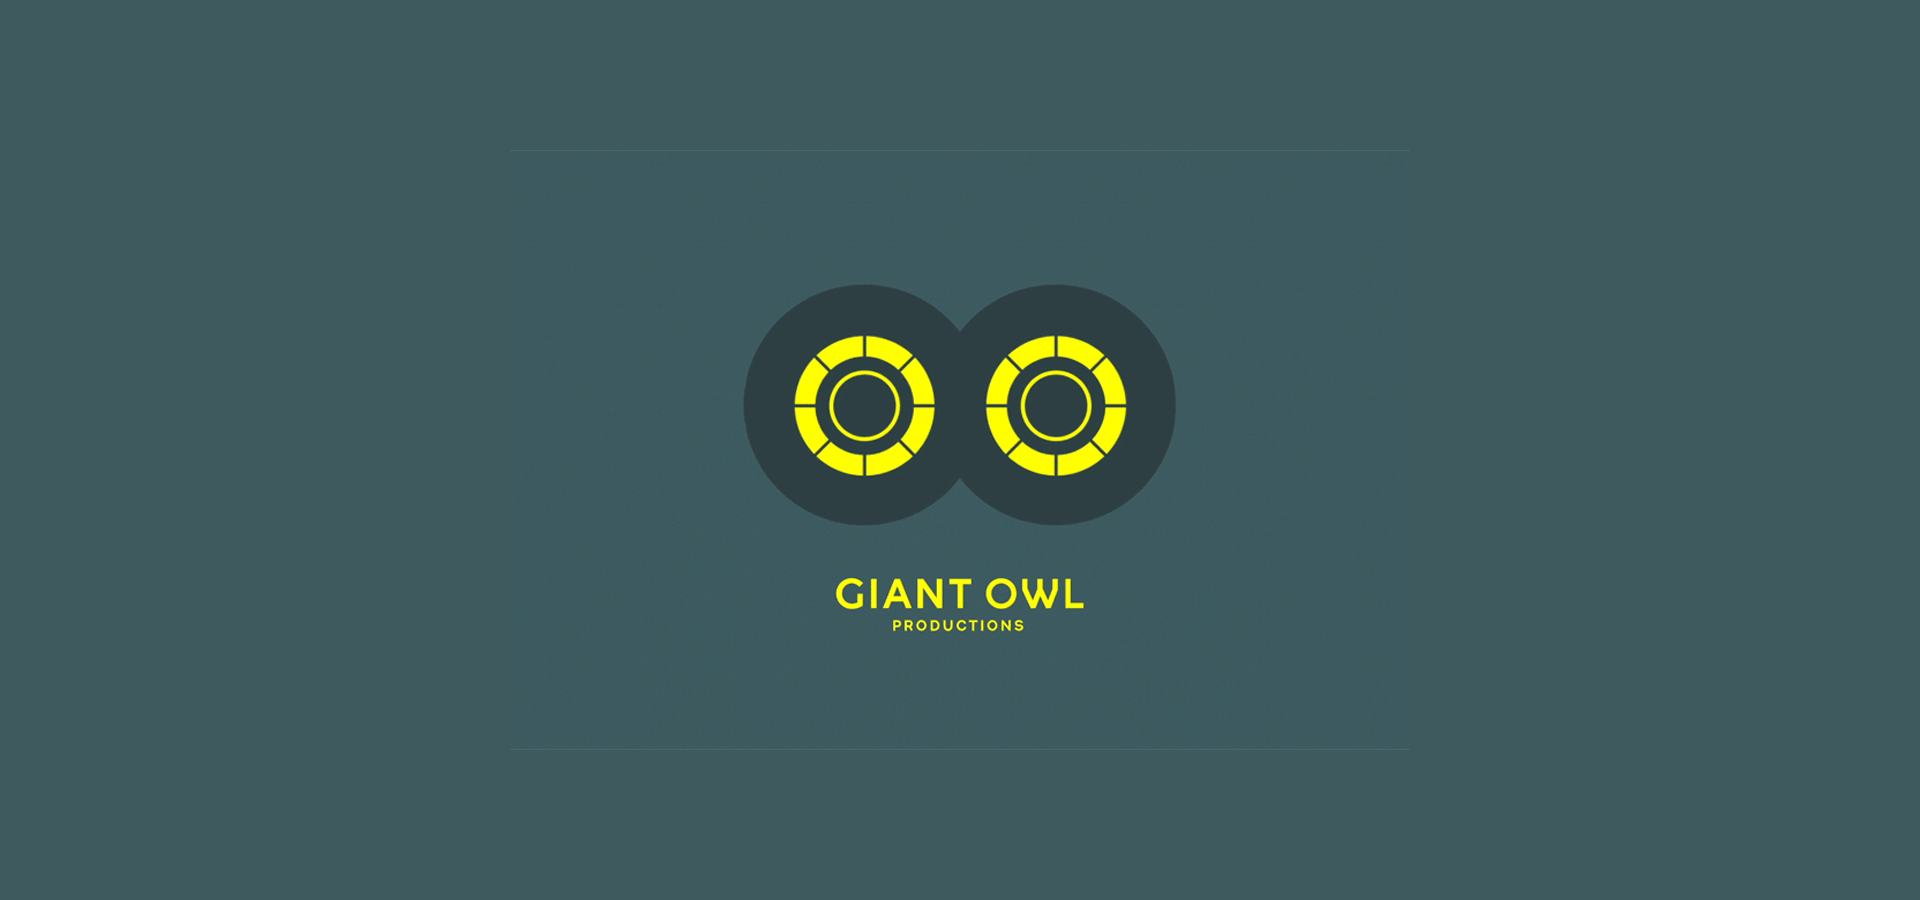 01_giant_owl_animated_logo_by_alphabetical_on_bpo